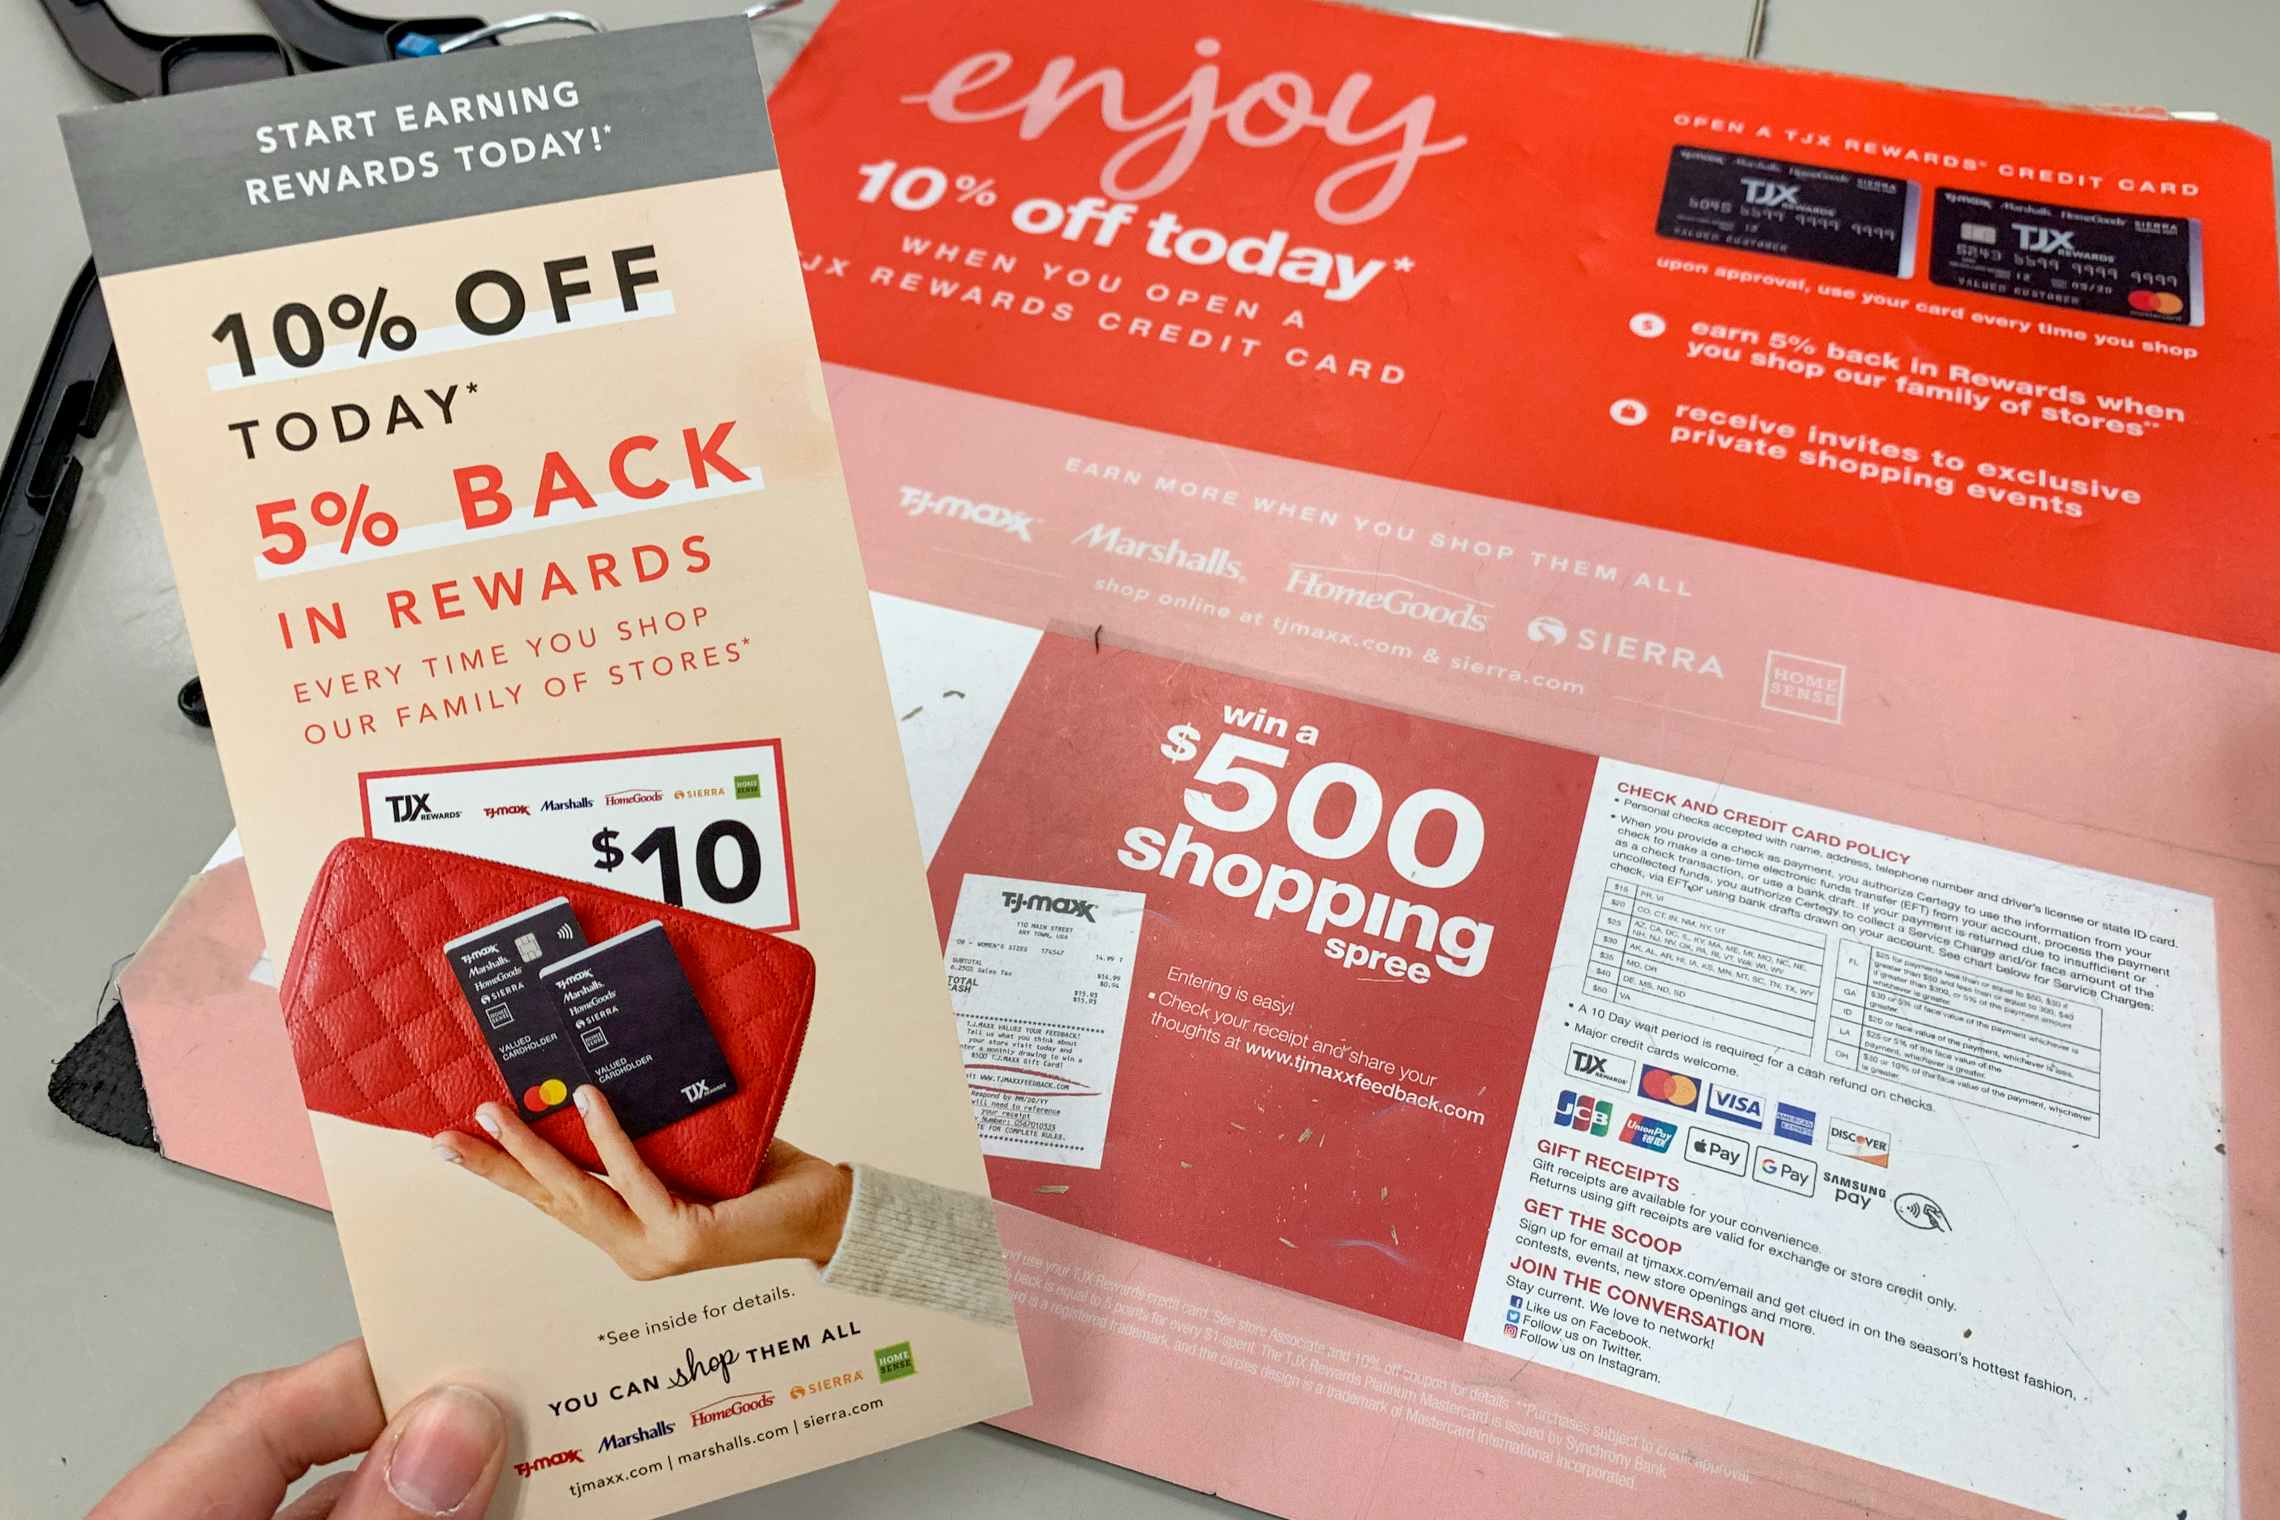 TJ Maxx credit card and reward brochure signage